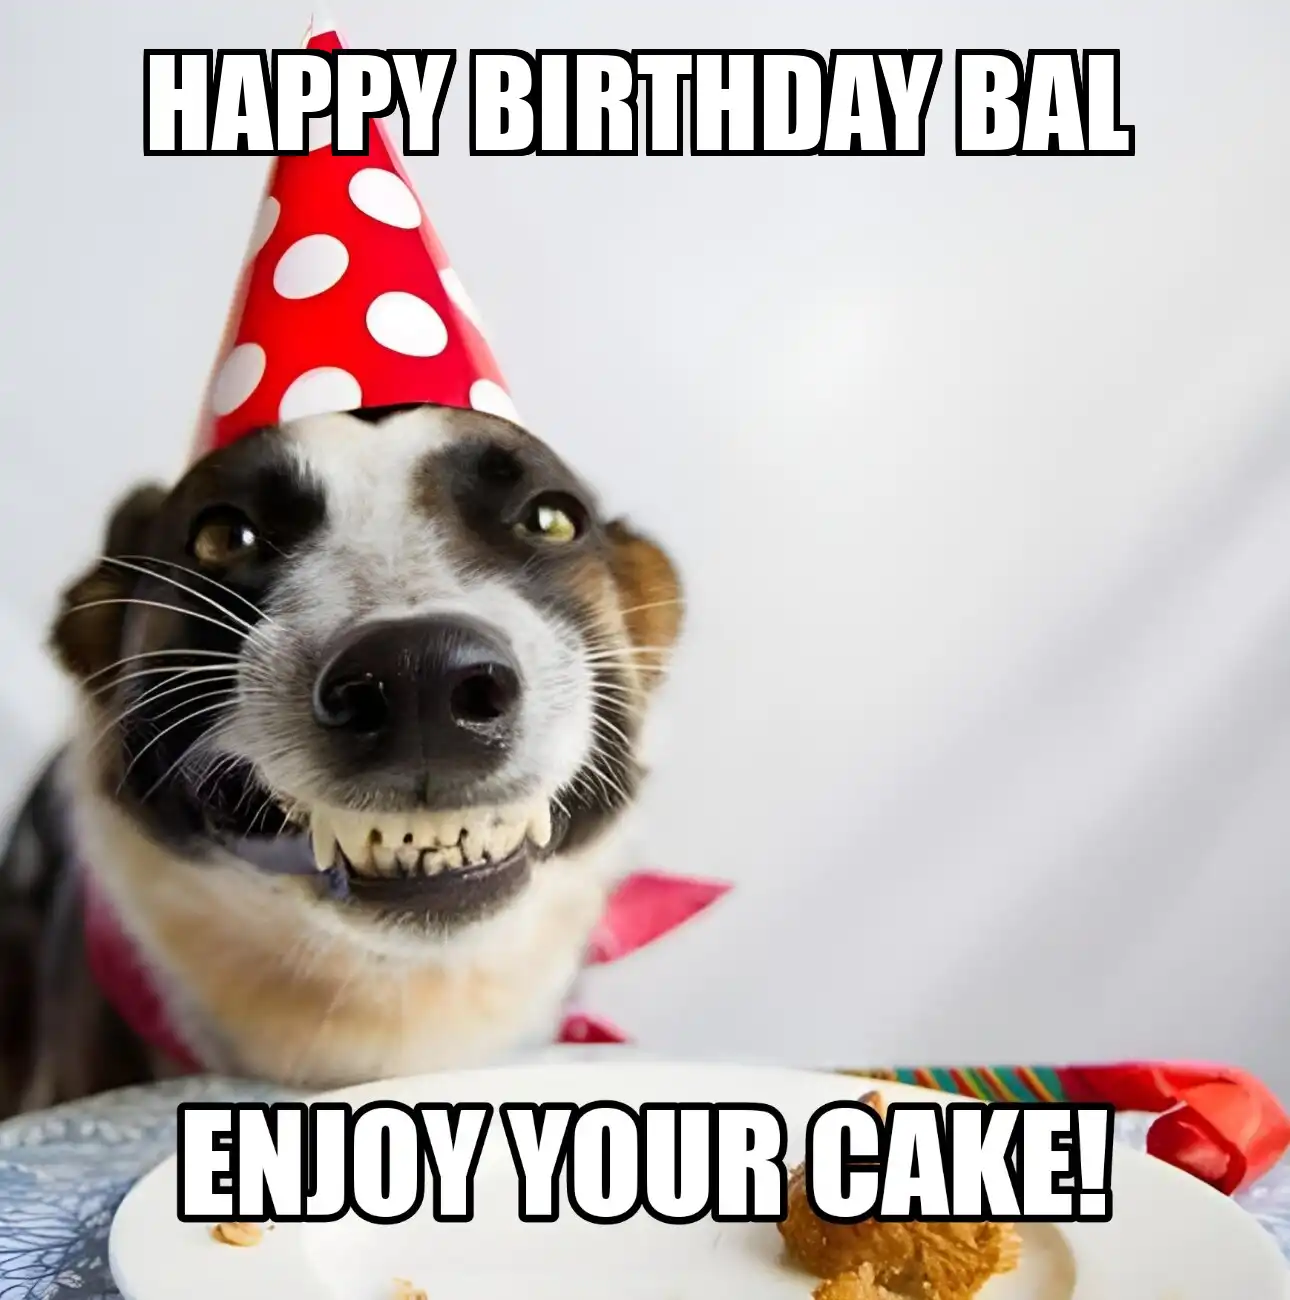 Happy Birthday Bal Enjoy Your Cake Dog Meme